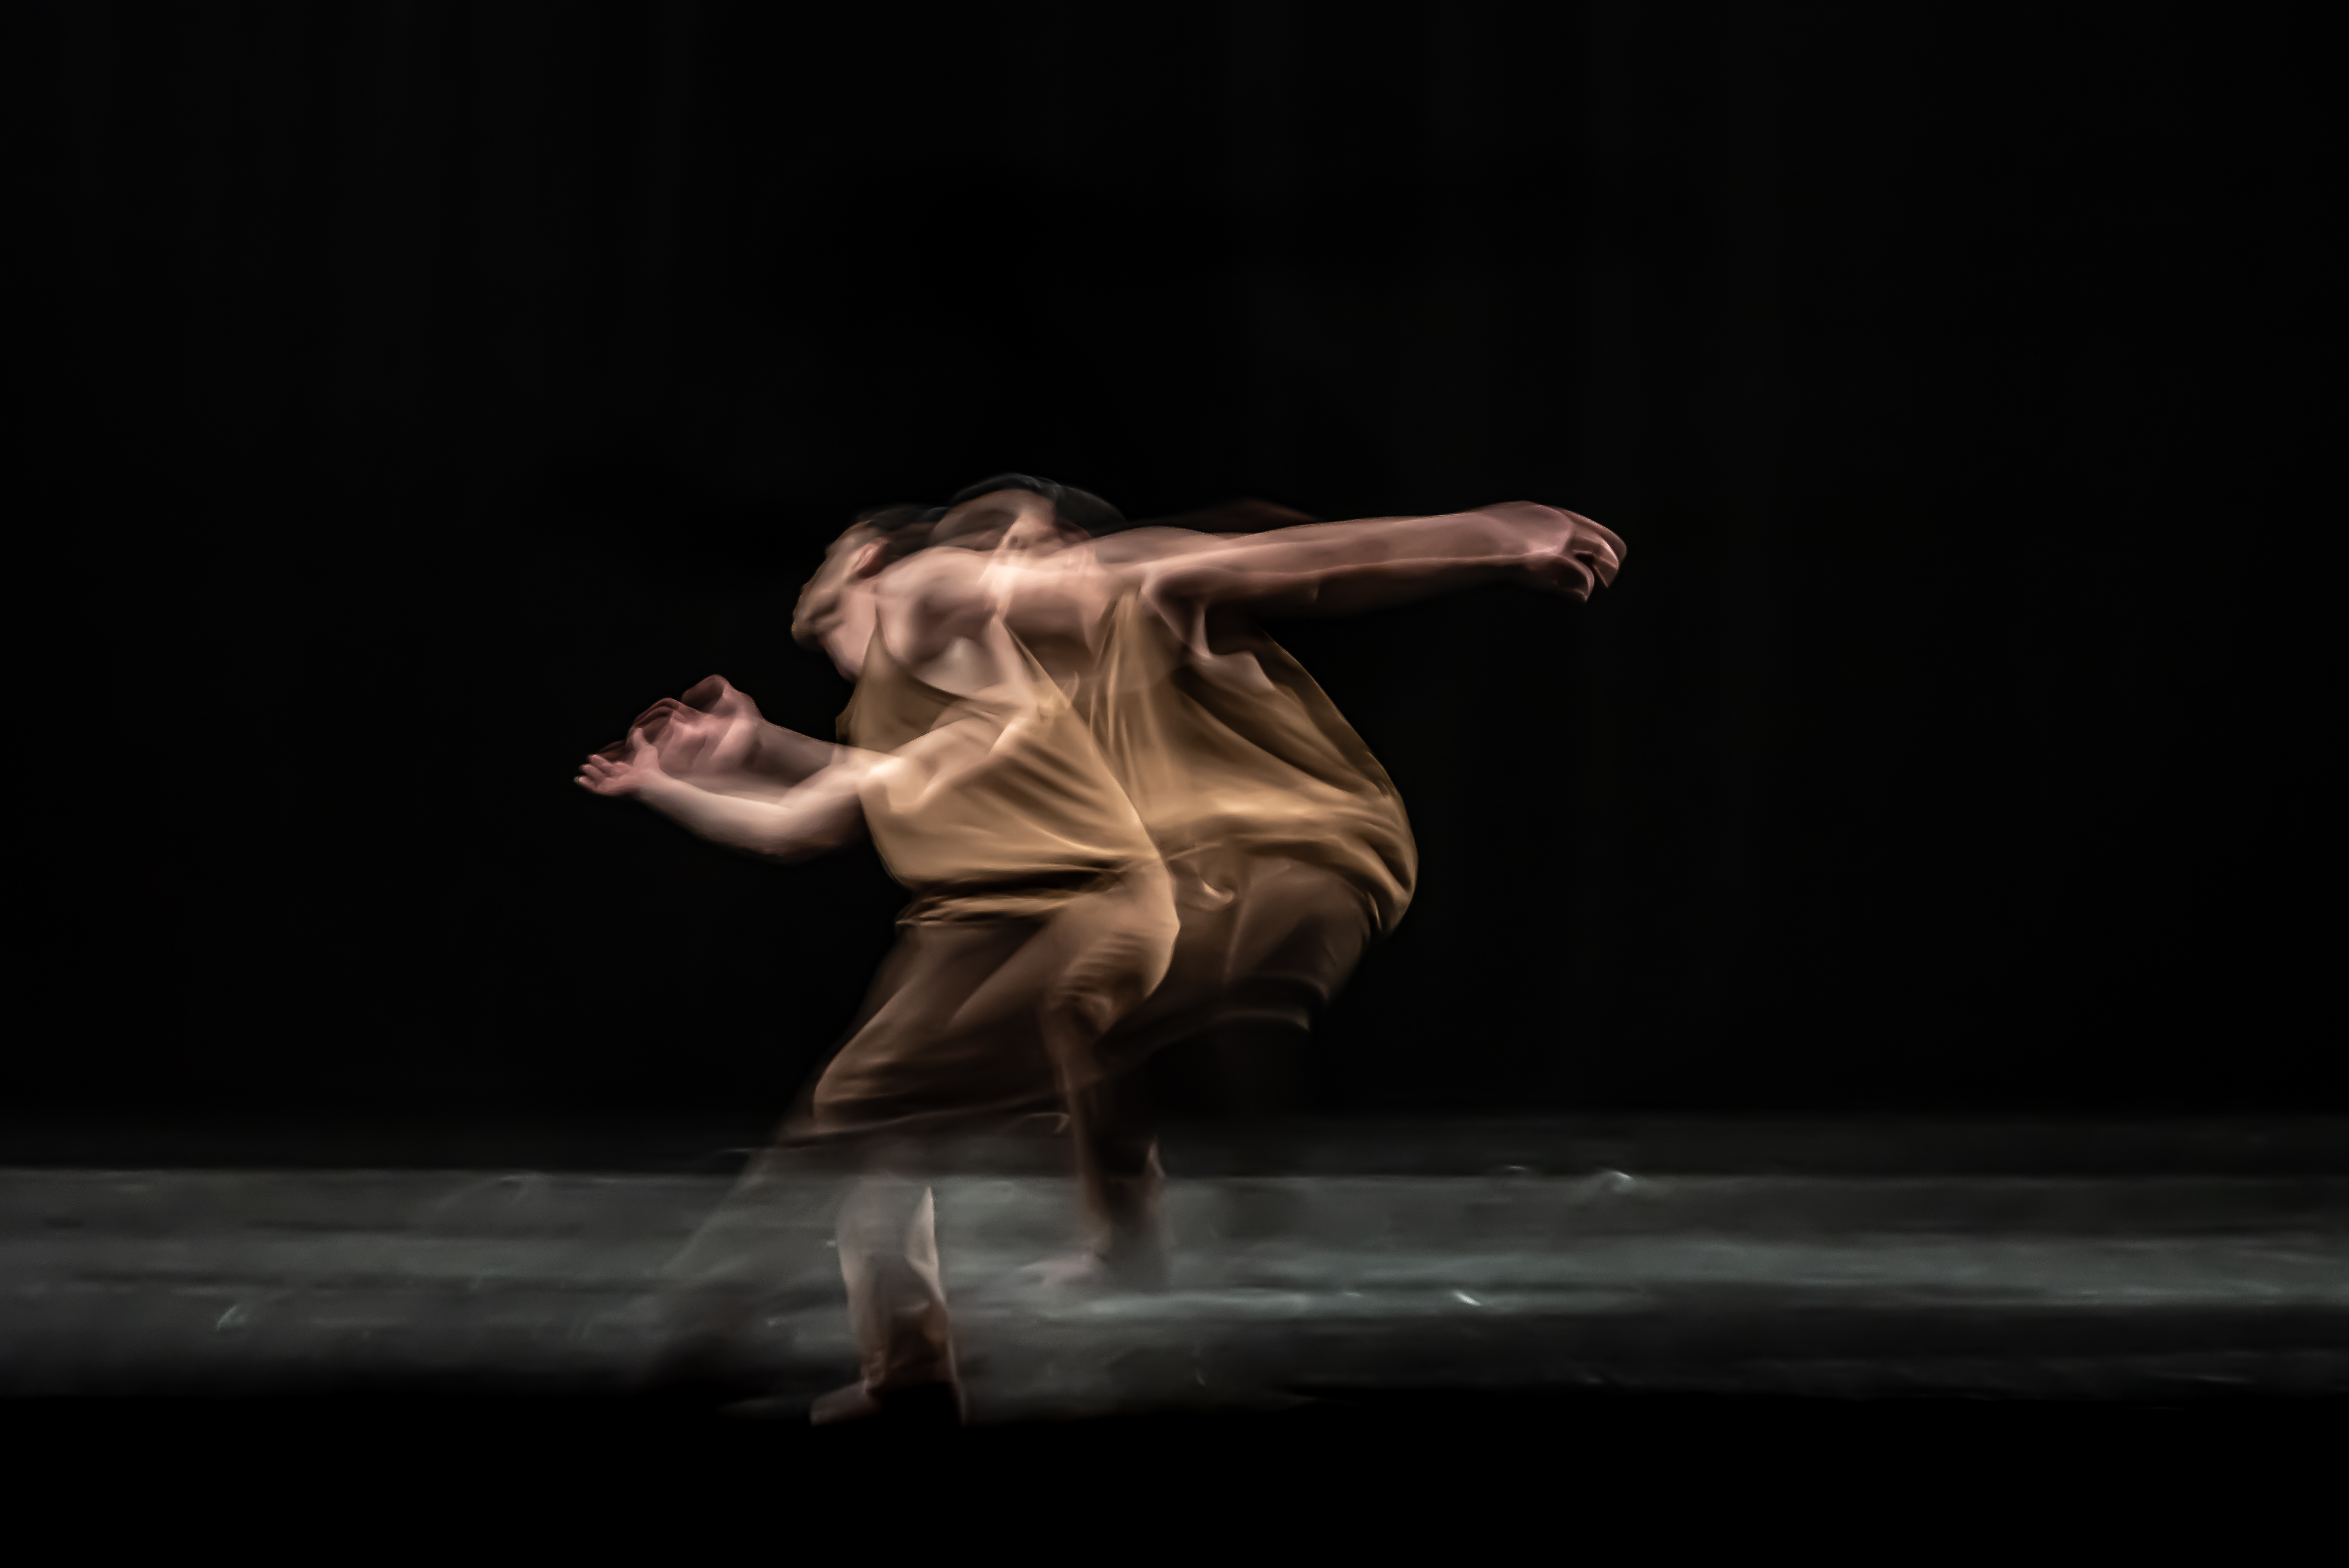 Blurred dancer showing movement